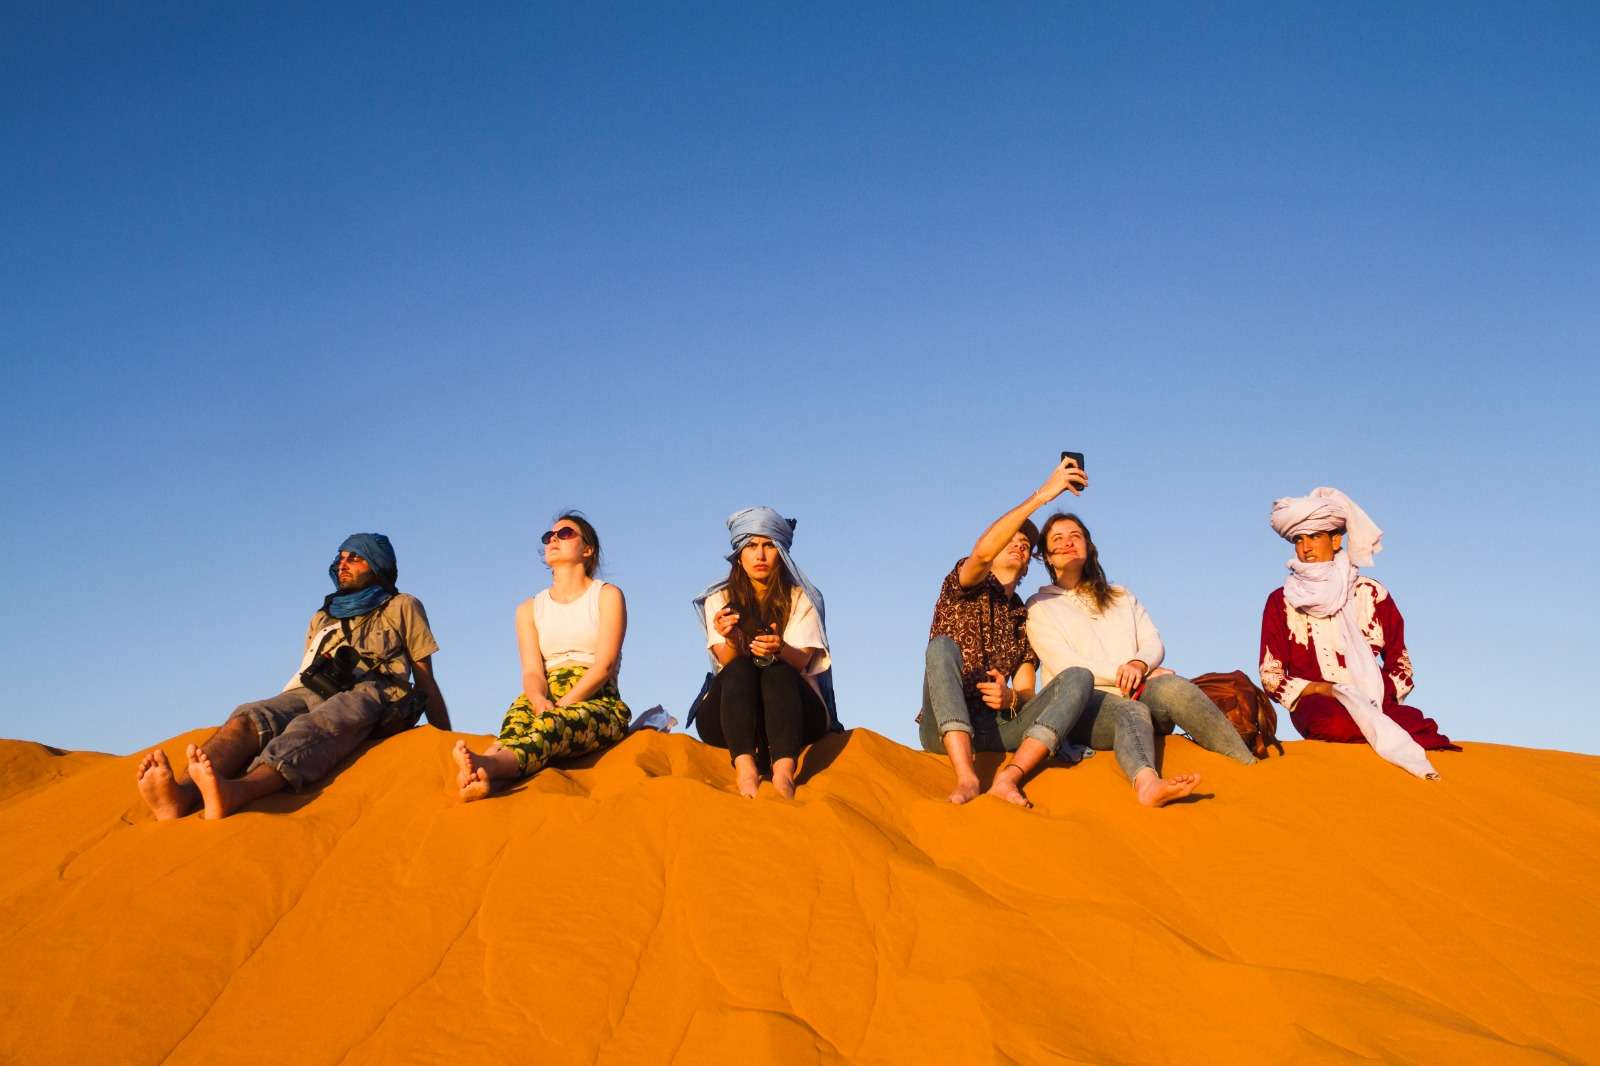 gcc tourism industry. tourist visit dubai desert